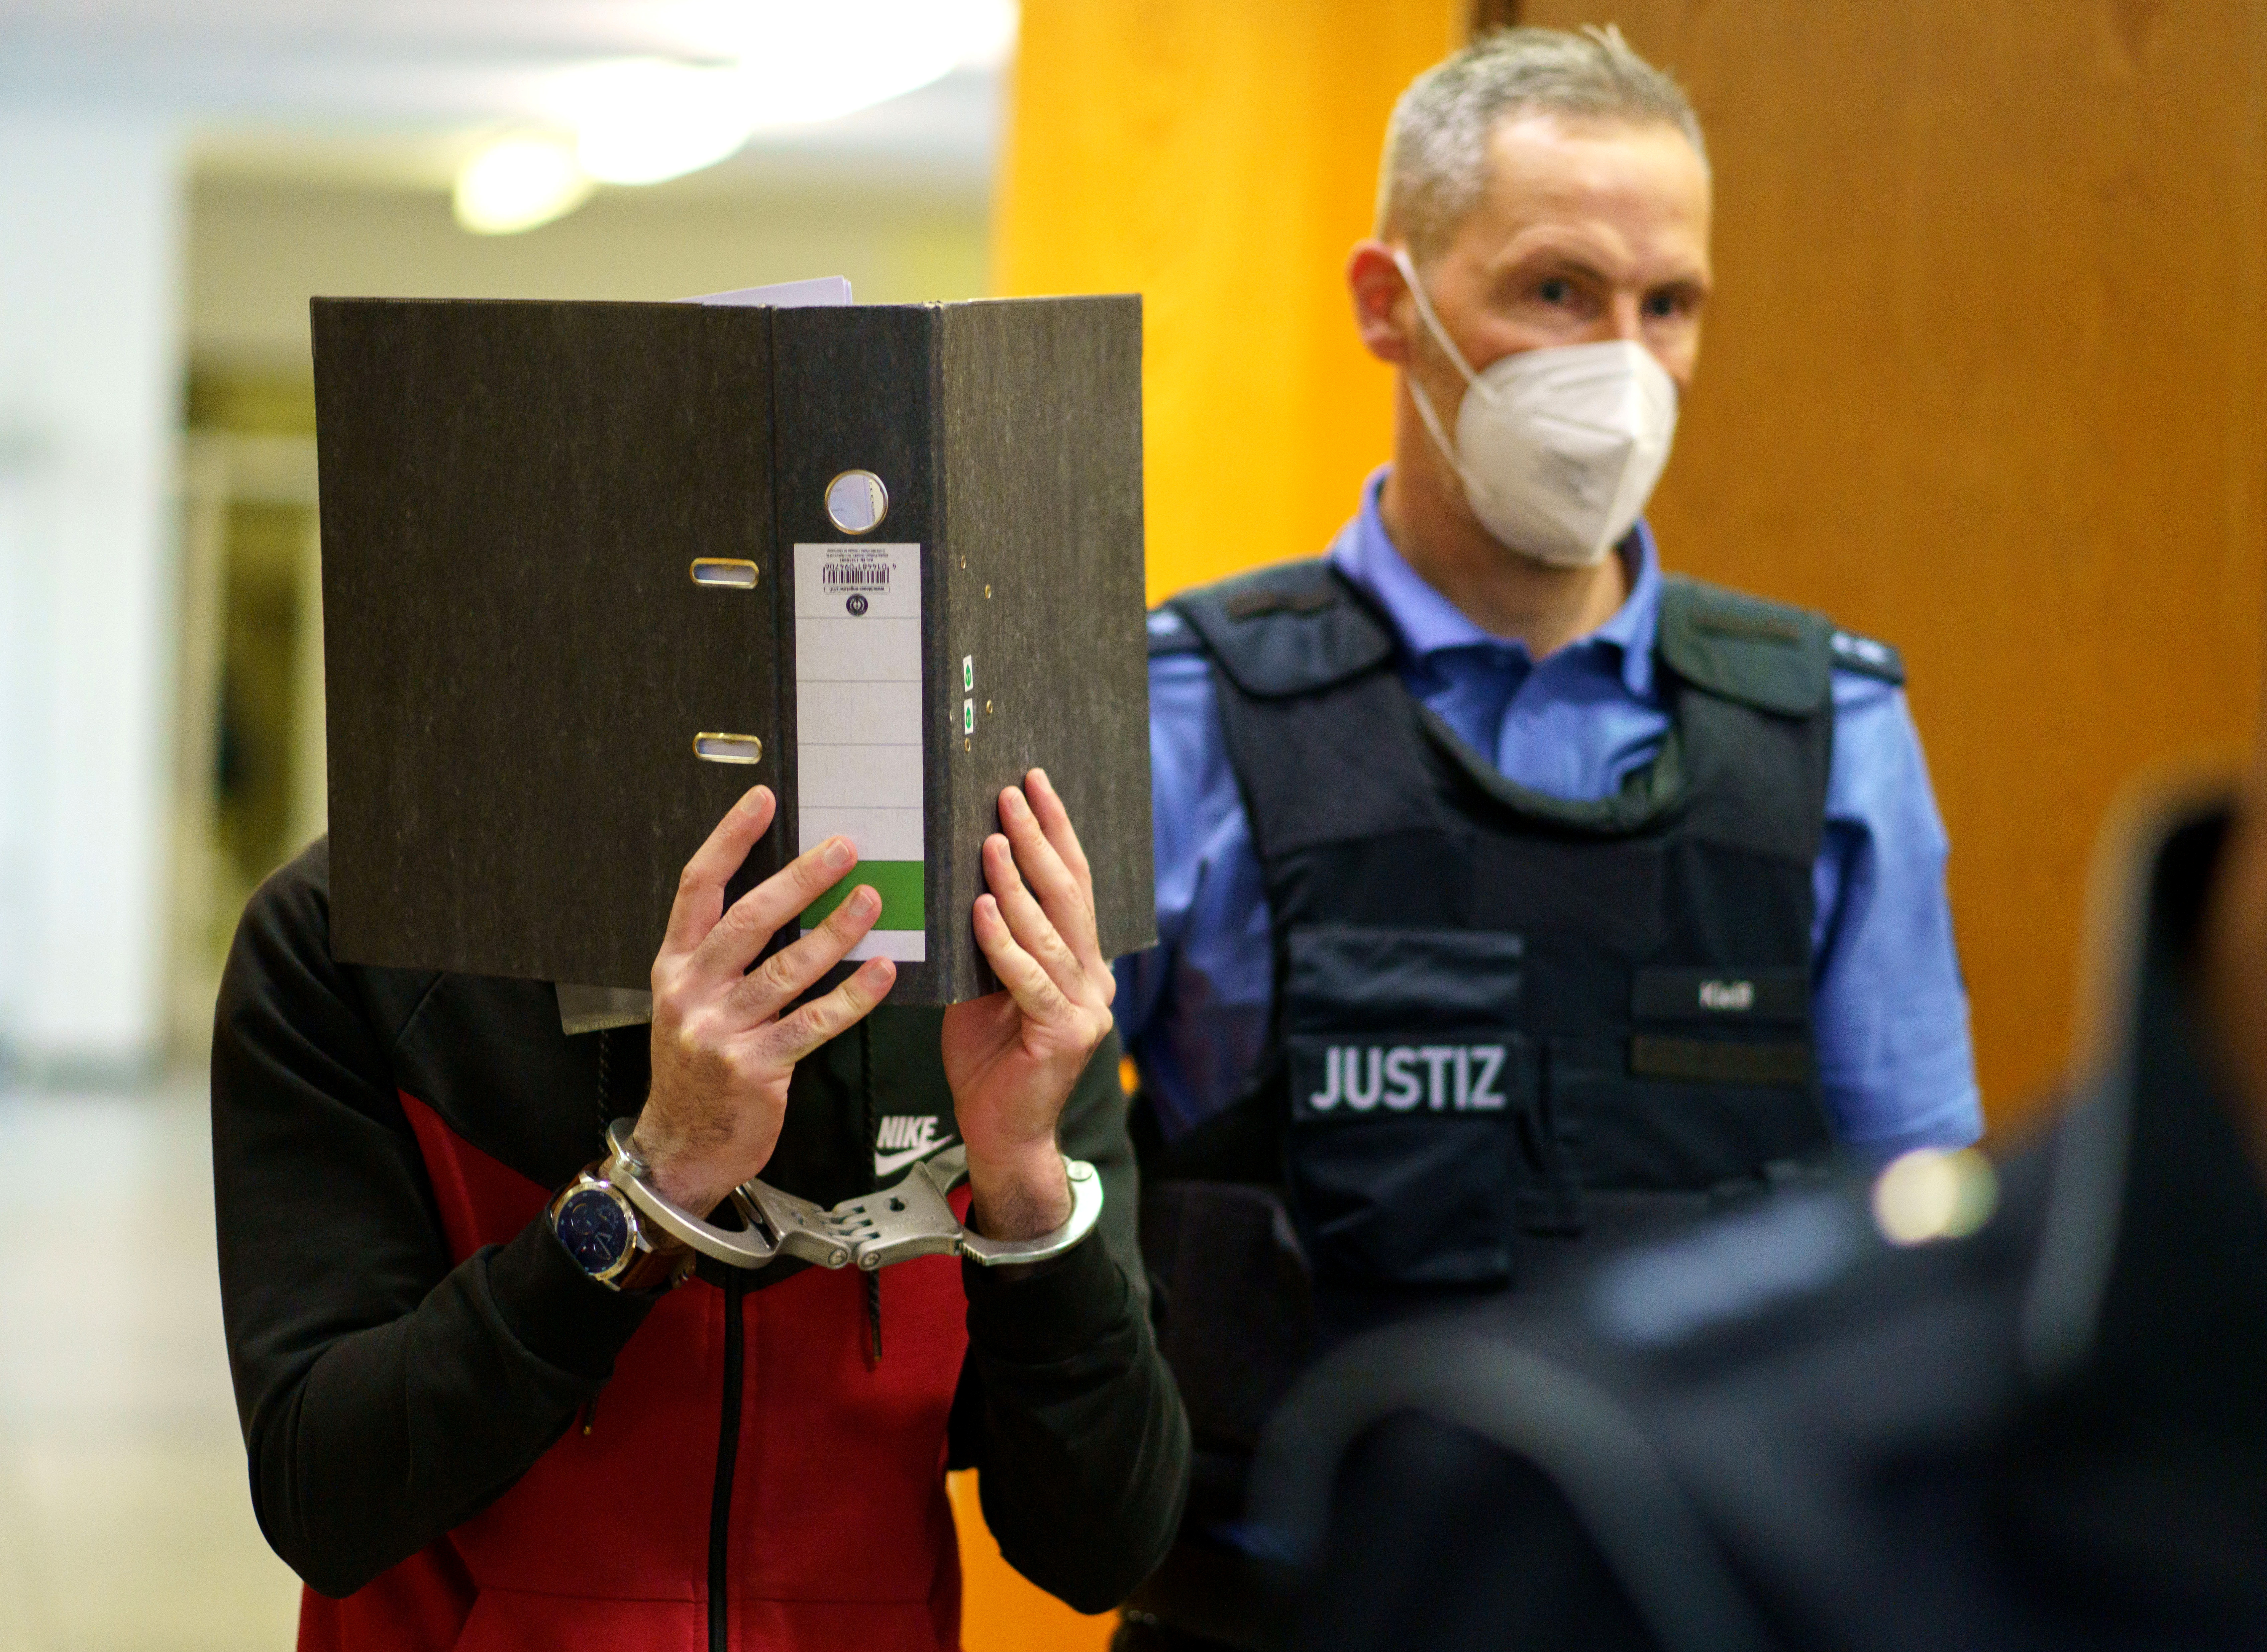 Iraqi defendant Taha Al-J. covers his face as he arrives before his verdict in a courtroom in Frankfurt, Germany, November 30, 2021.        Frank Rumpenhorst/Pool via REUTERS